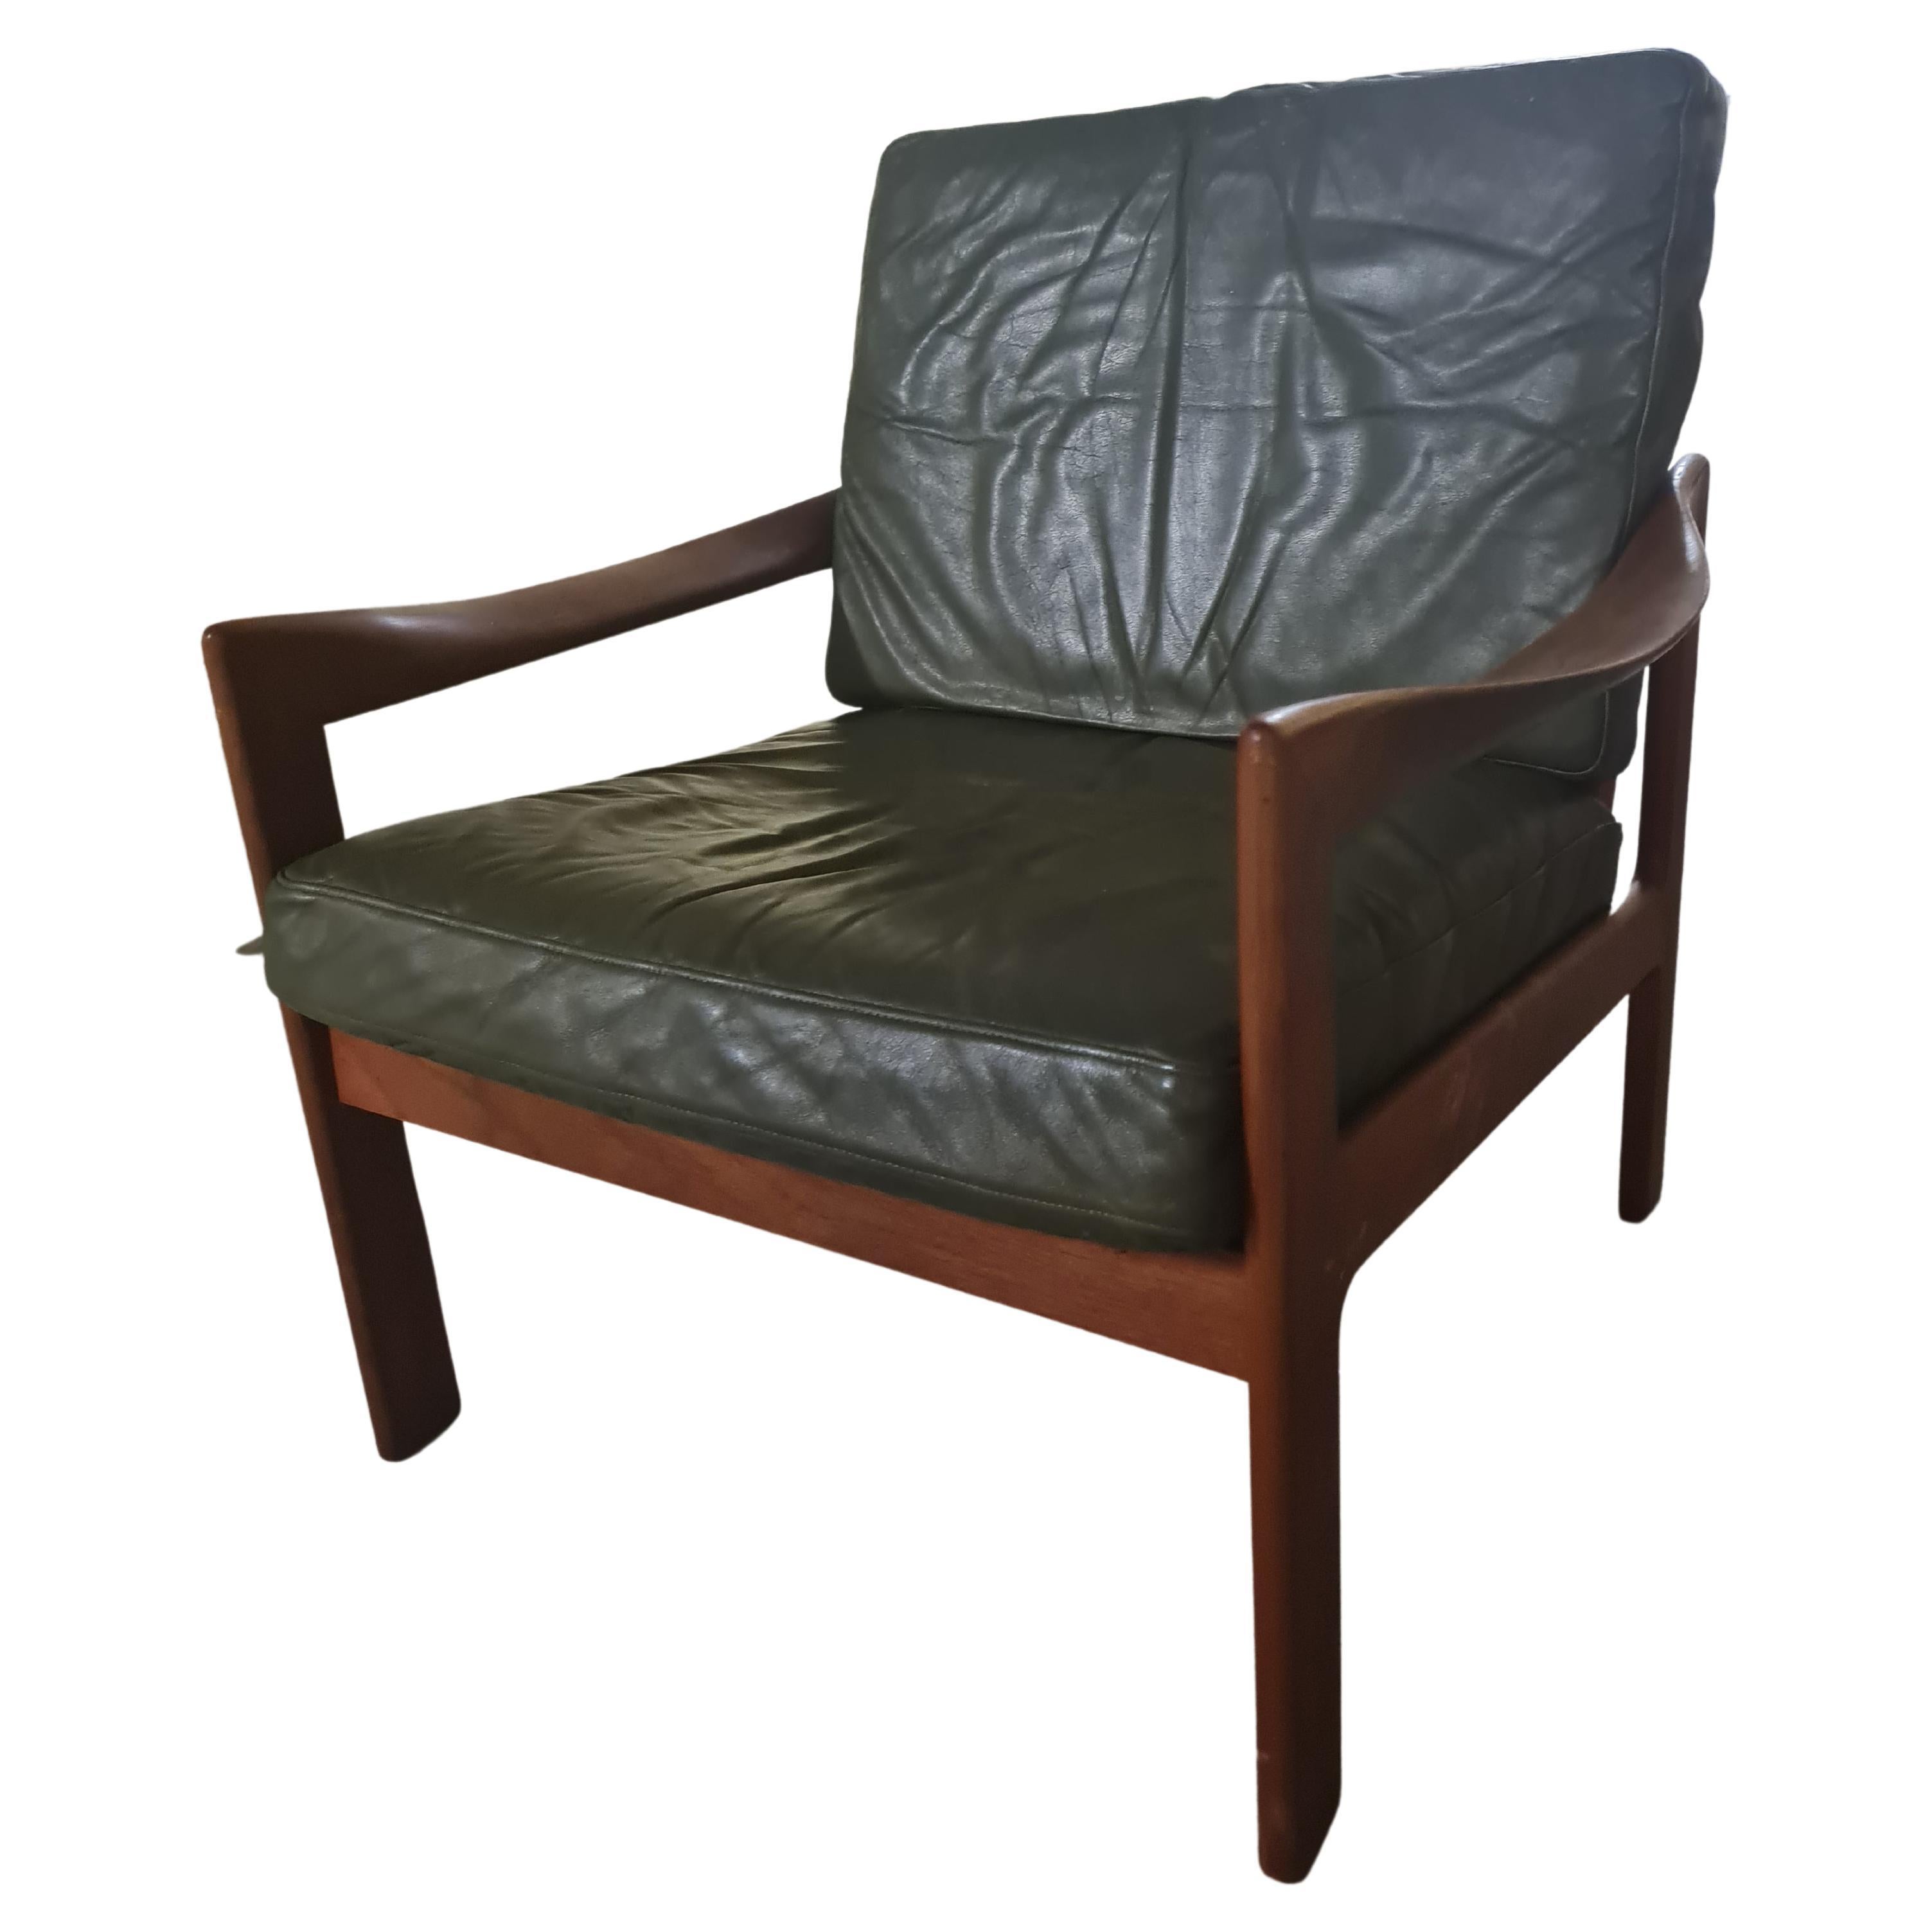 Illum Wikkelso armchair 1962 in Teak for Niels Eilersen